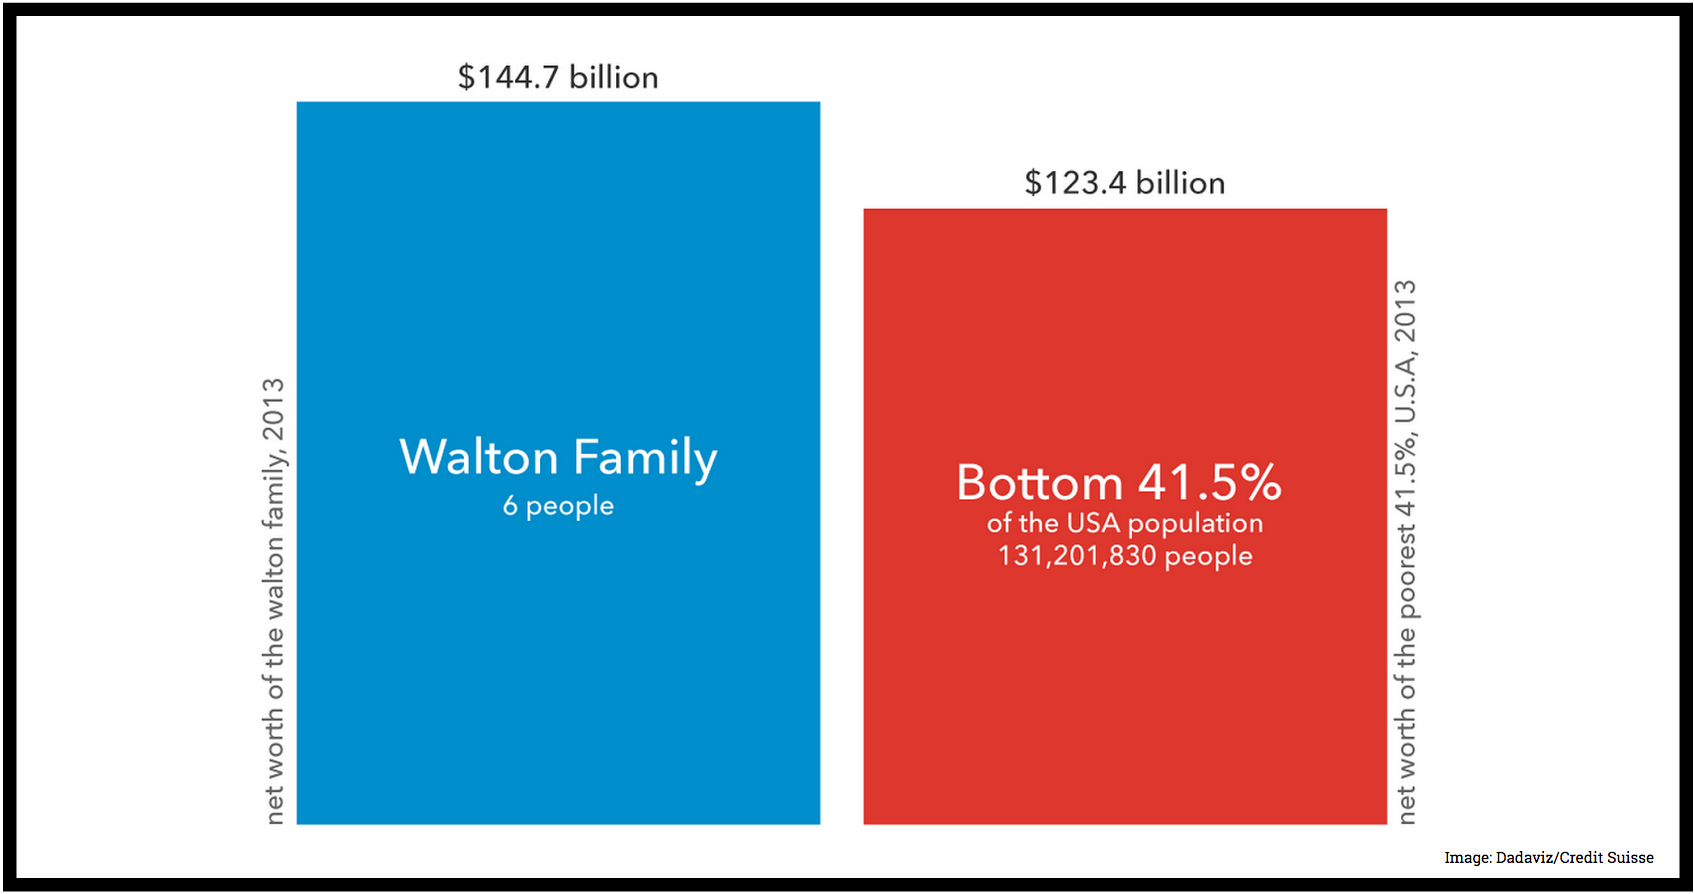 Walton Family Money